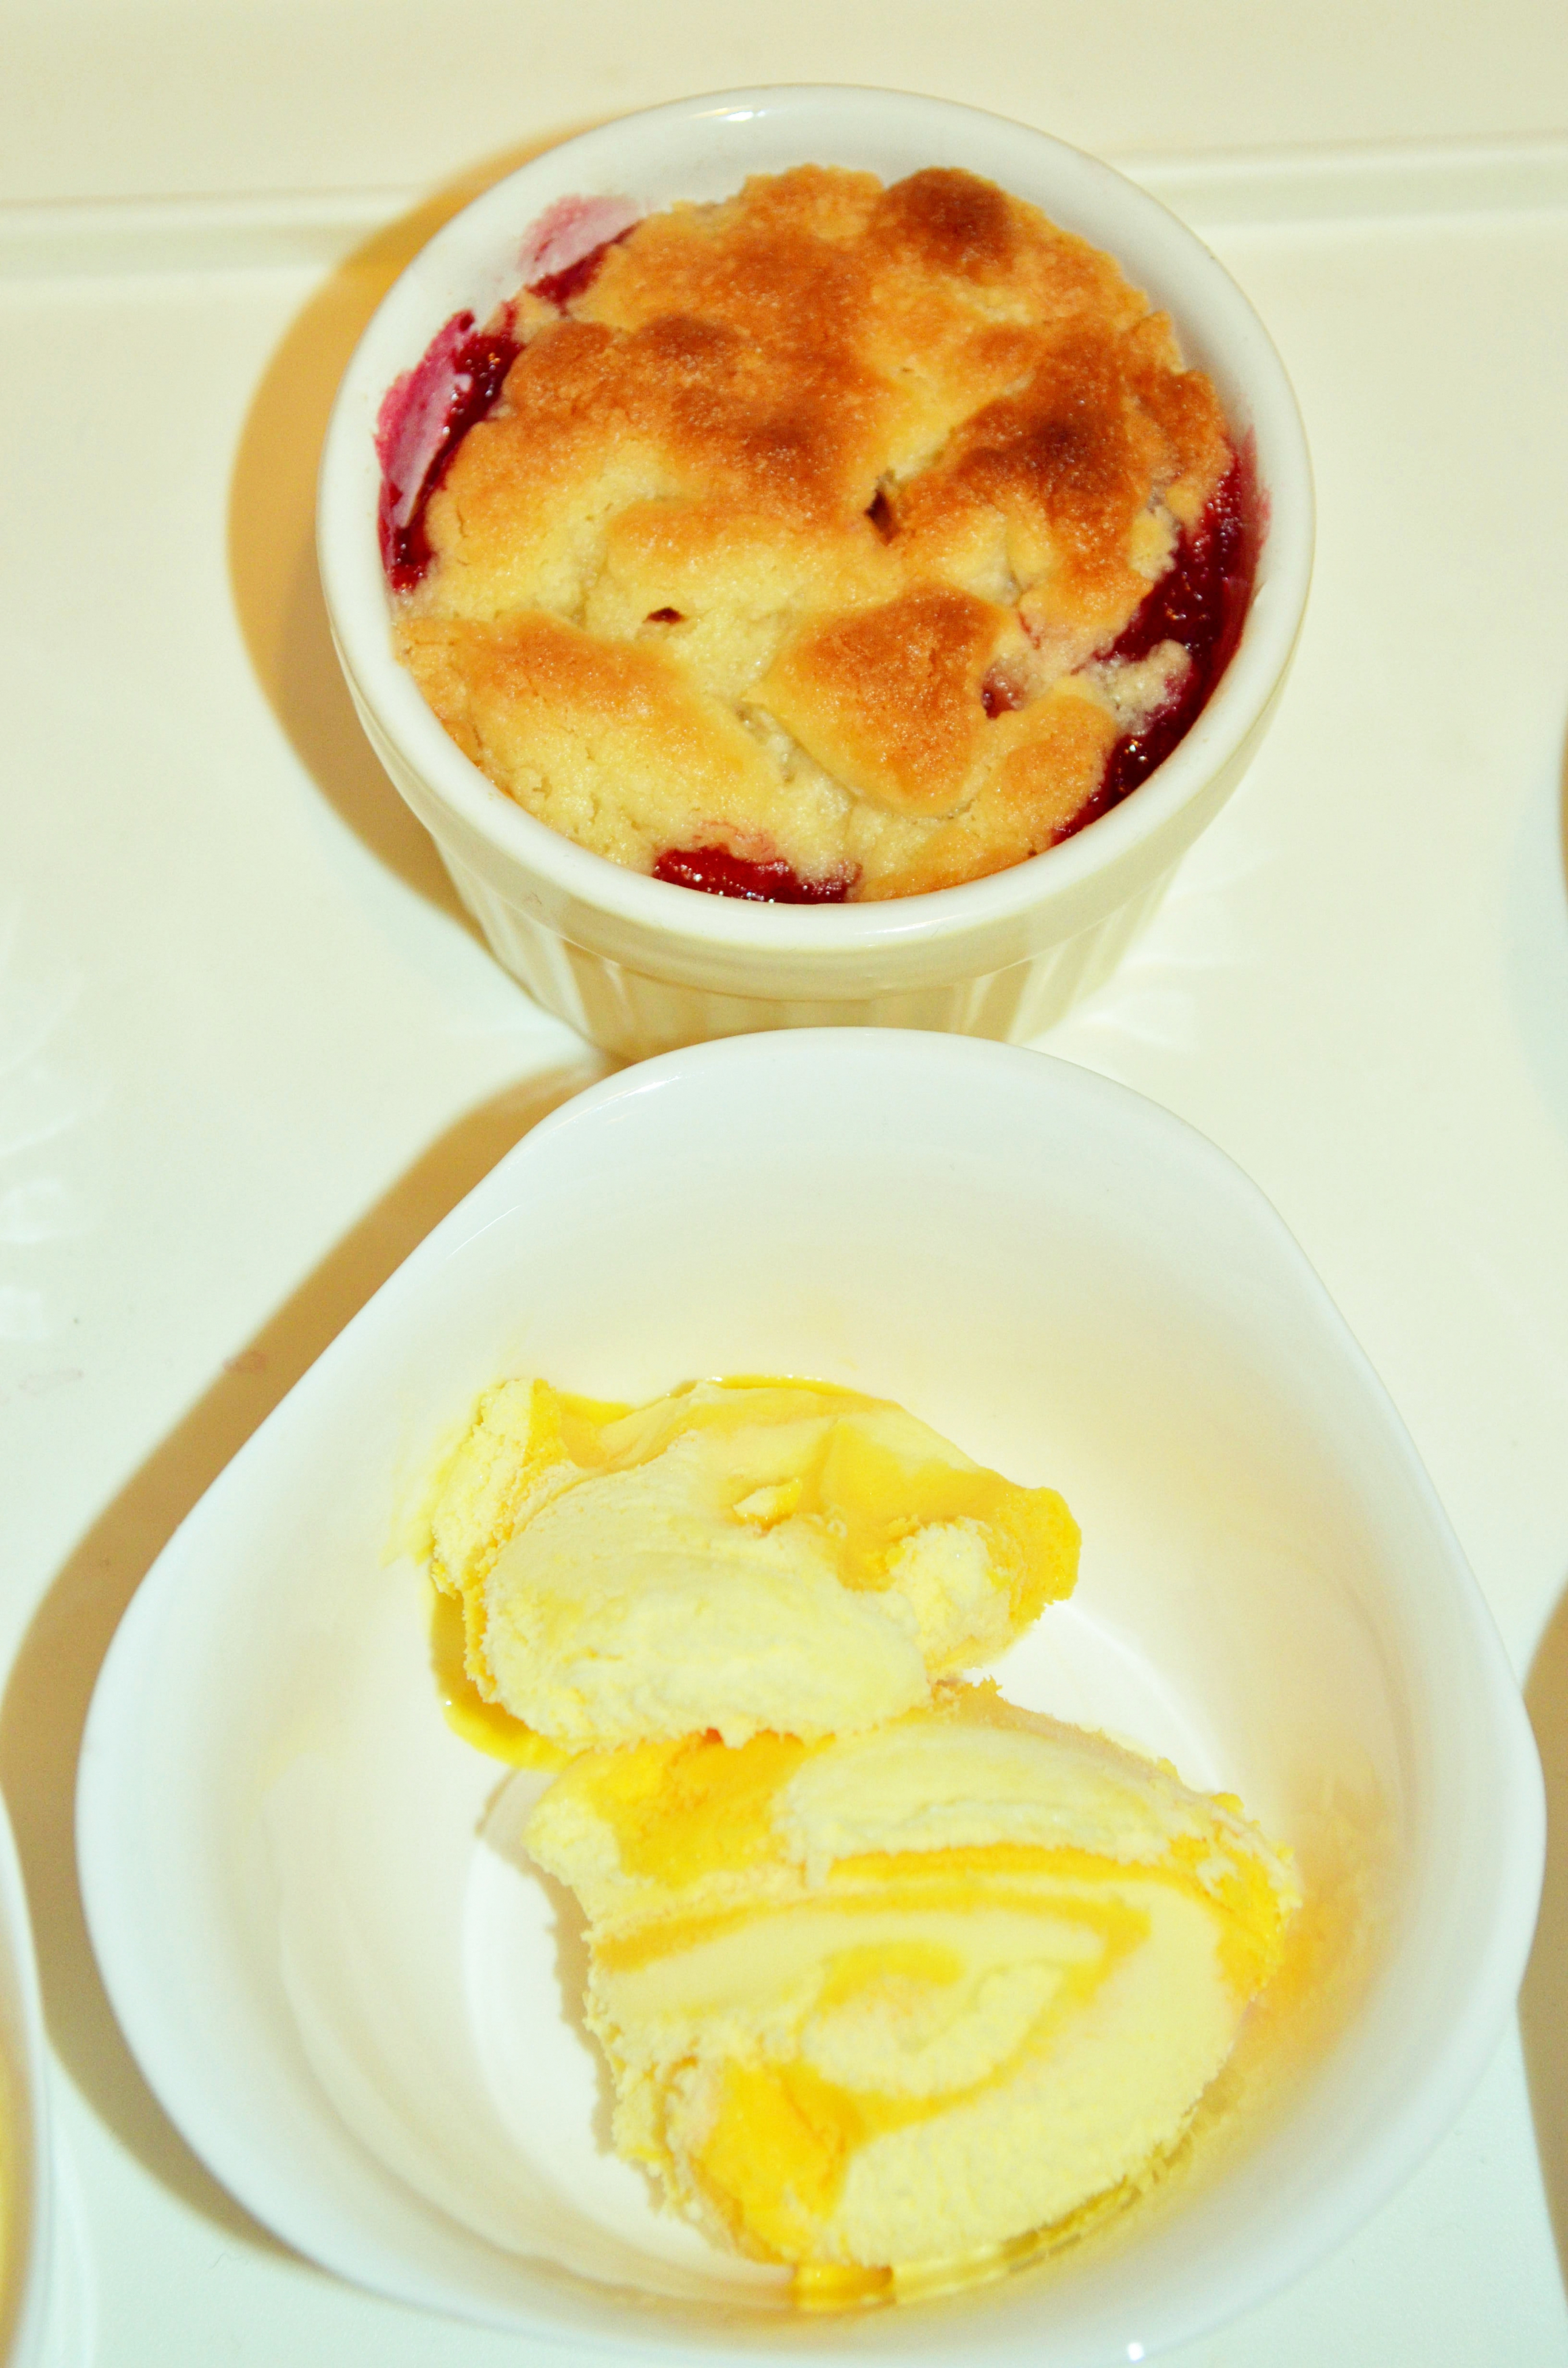 Raspberries and banana crumble with orange ice-cream!